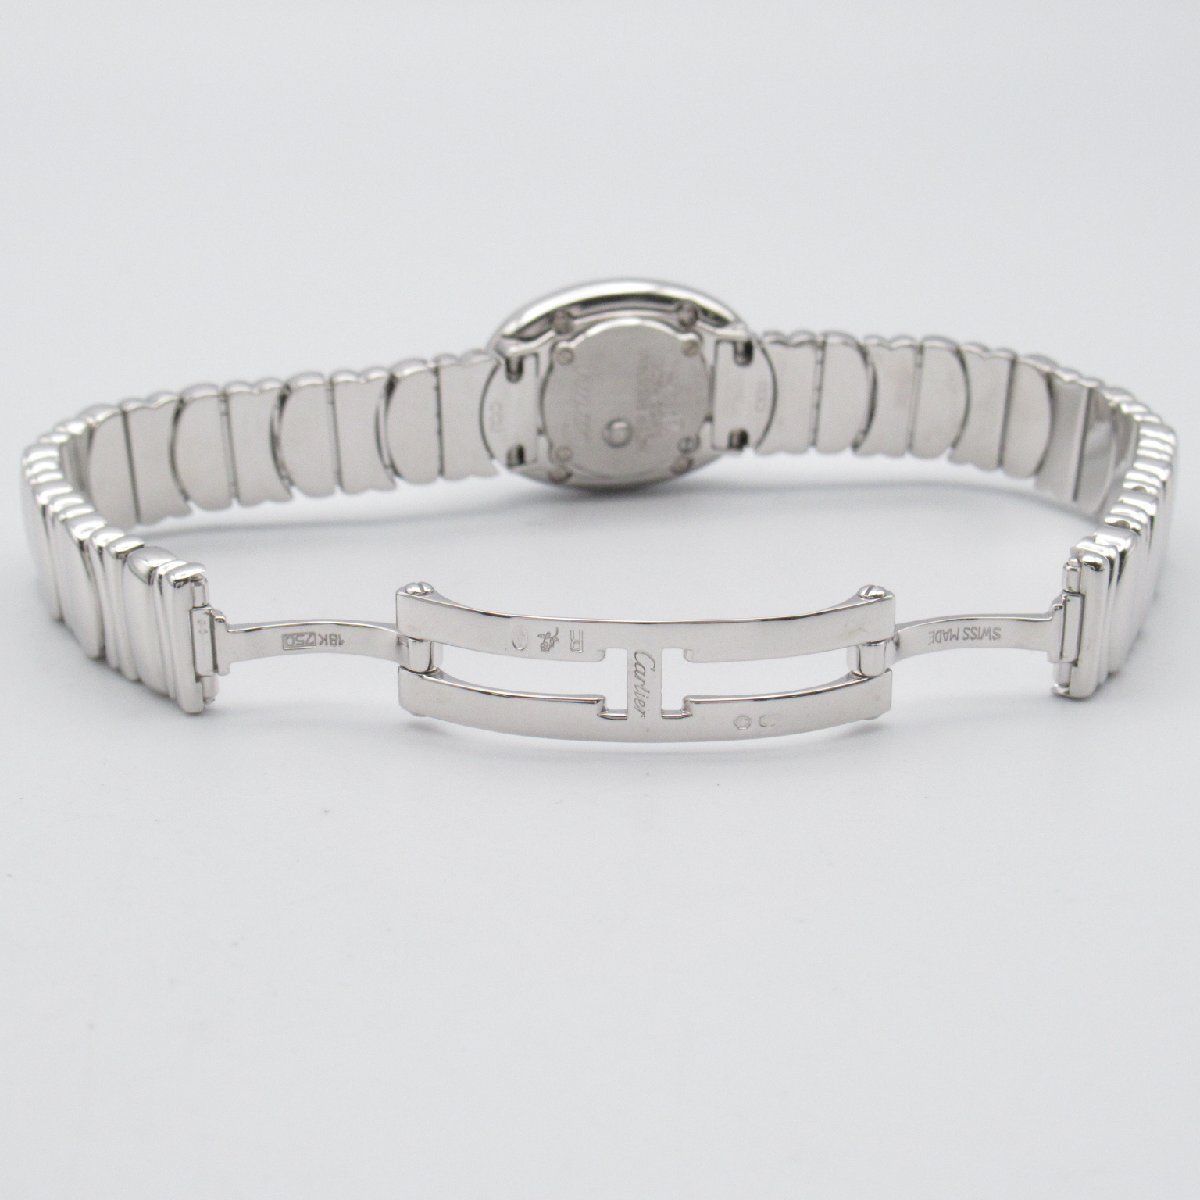  Cartier Mini Baignoire diamond bezel brand off CARTIER K18WG( white gold ) wristwatch WG used lady's 